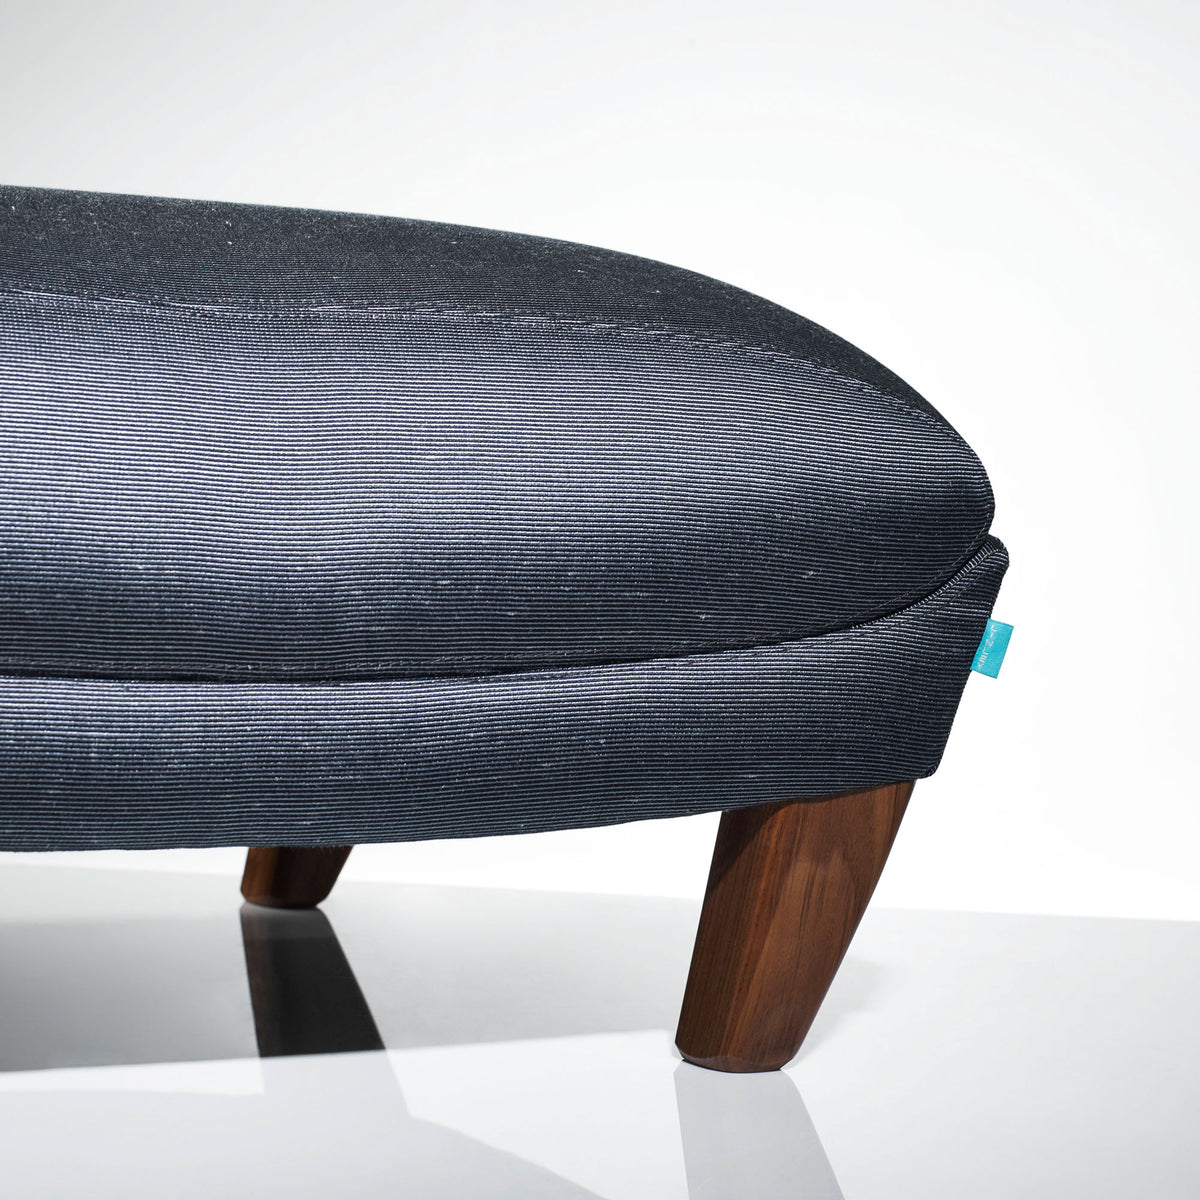 Aston Footstool - Navy Blue | Bespoke Design & Luxury Furniture | LINLEY